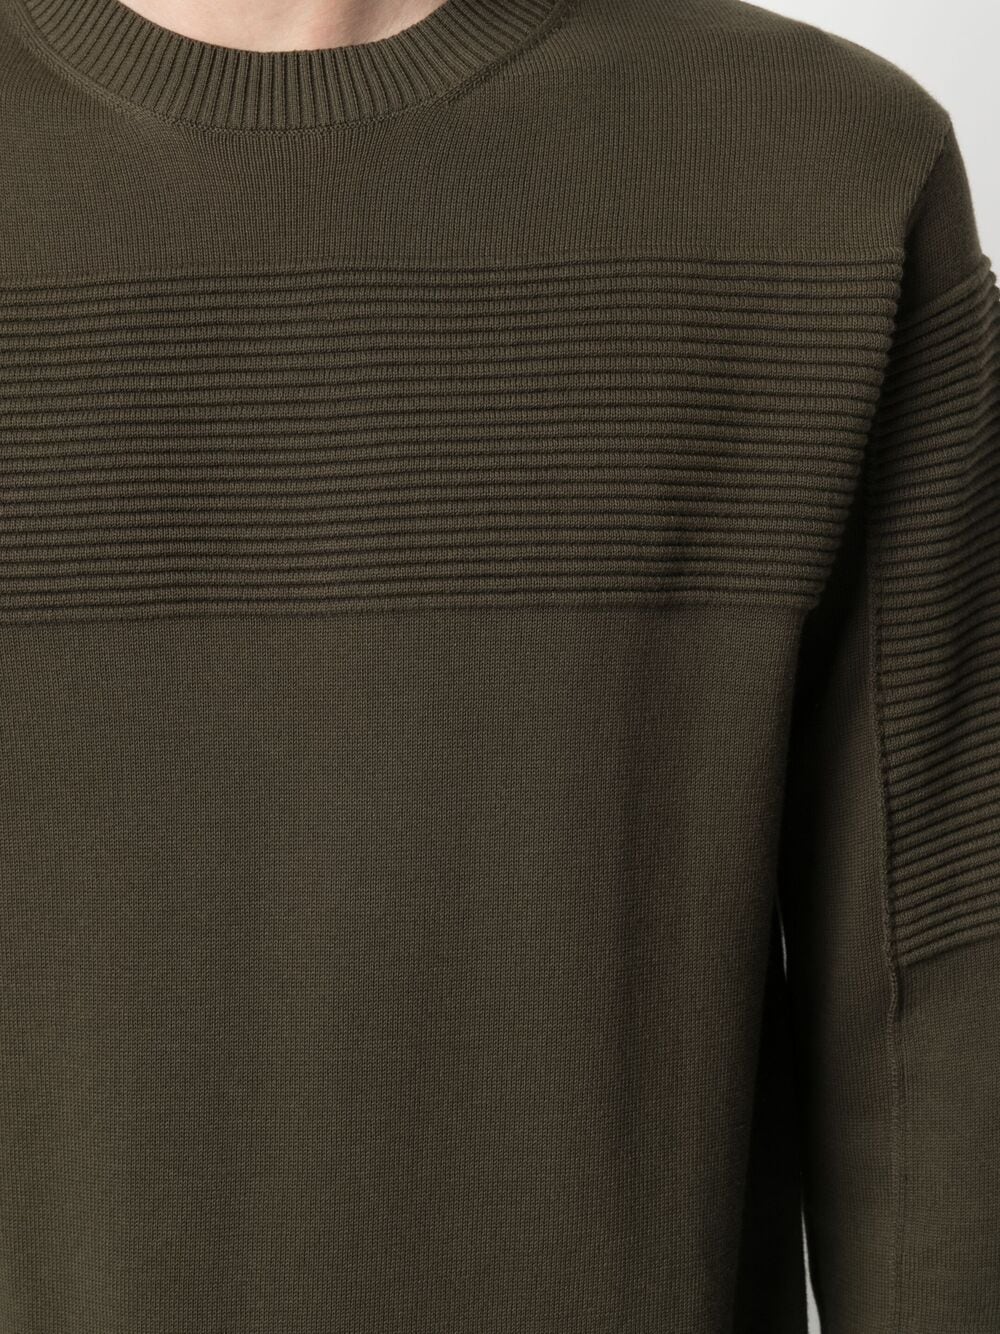 фото Les hommes свитер с отделкой в рубчик